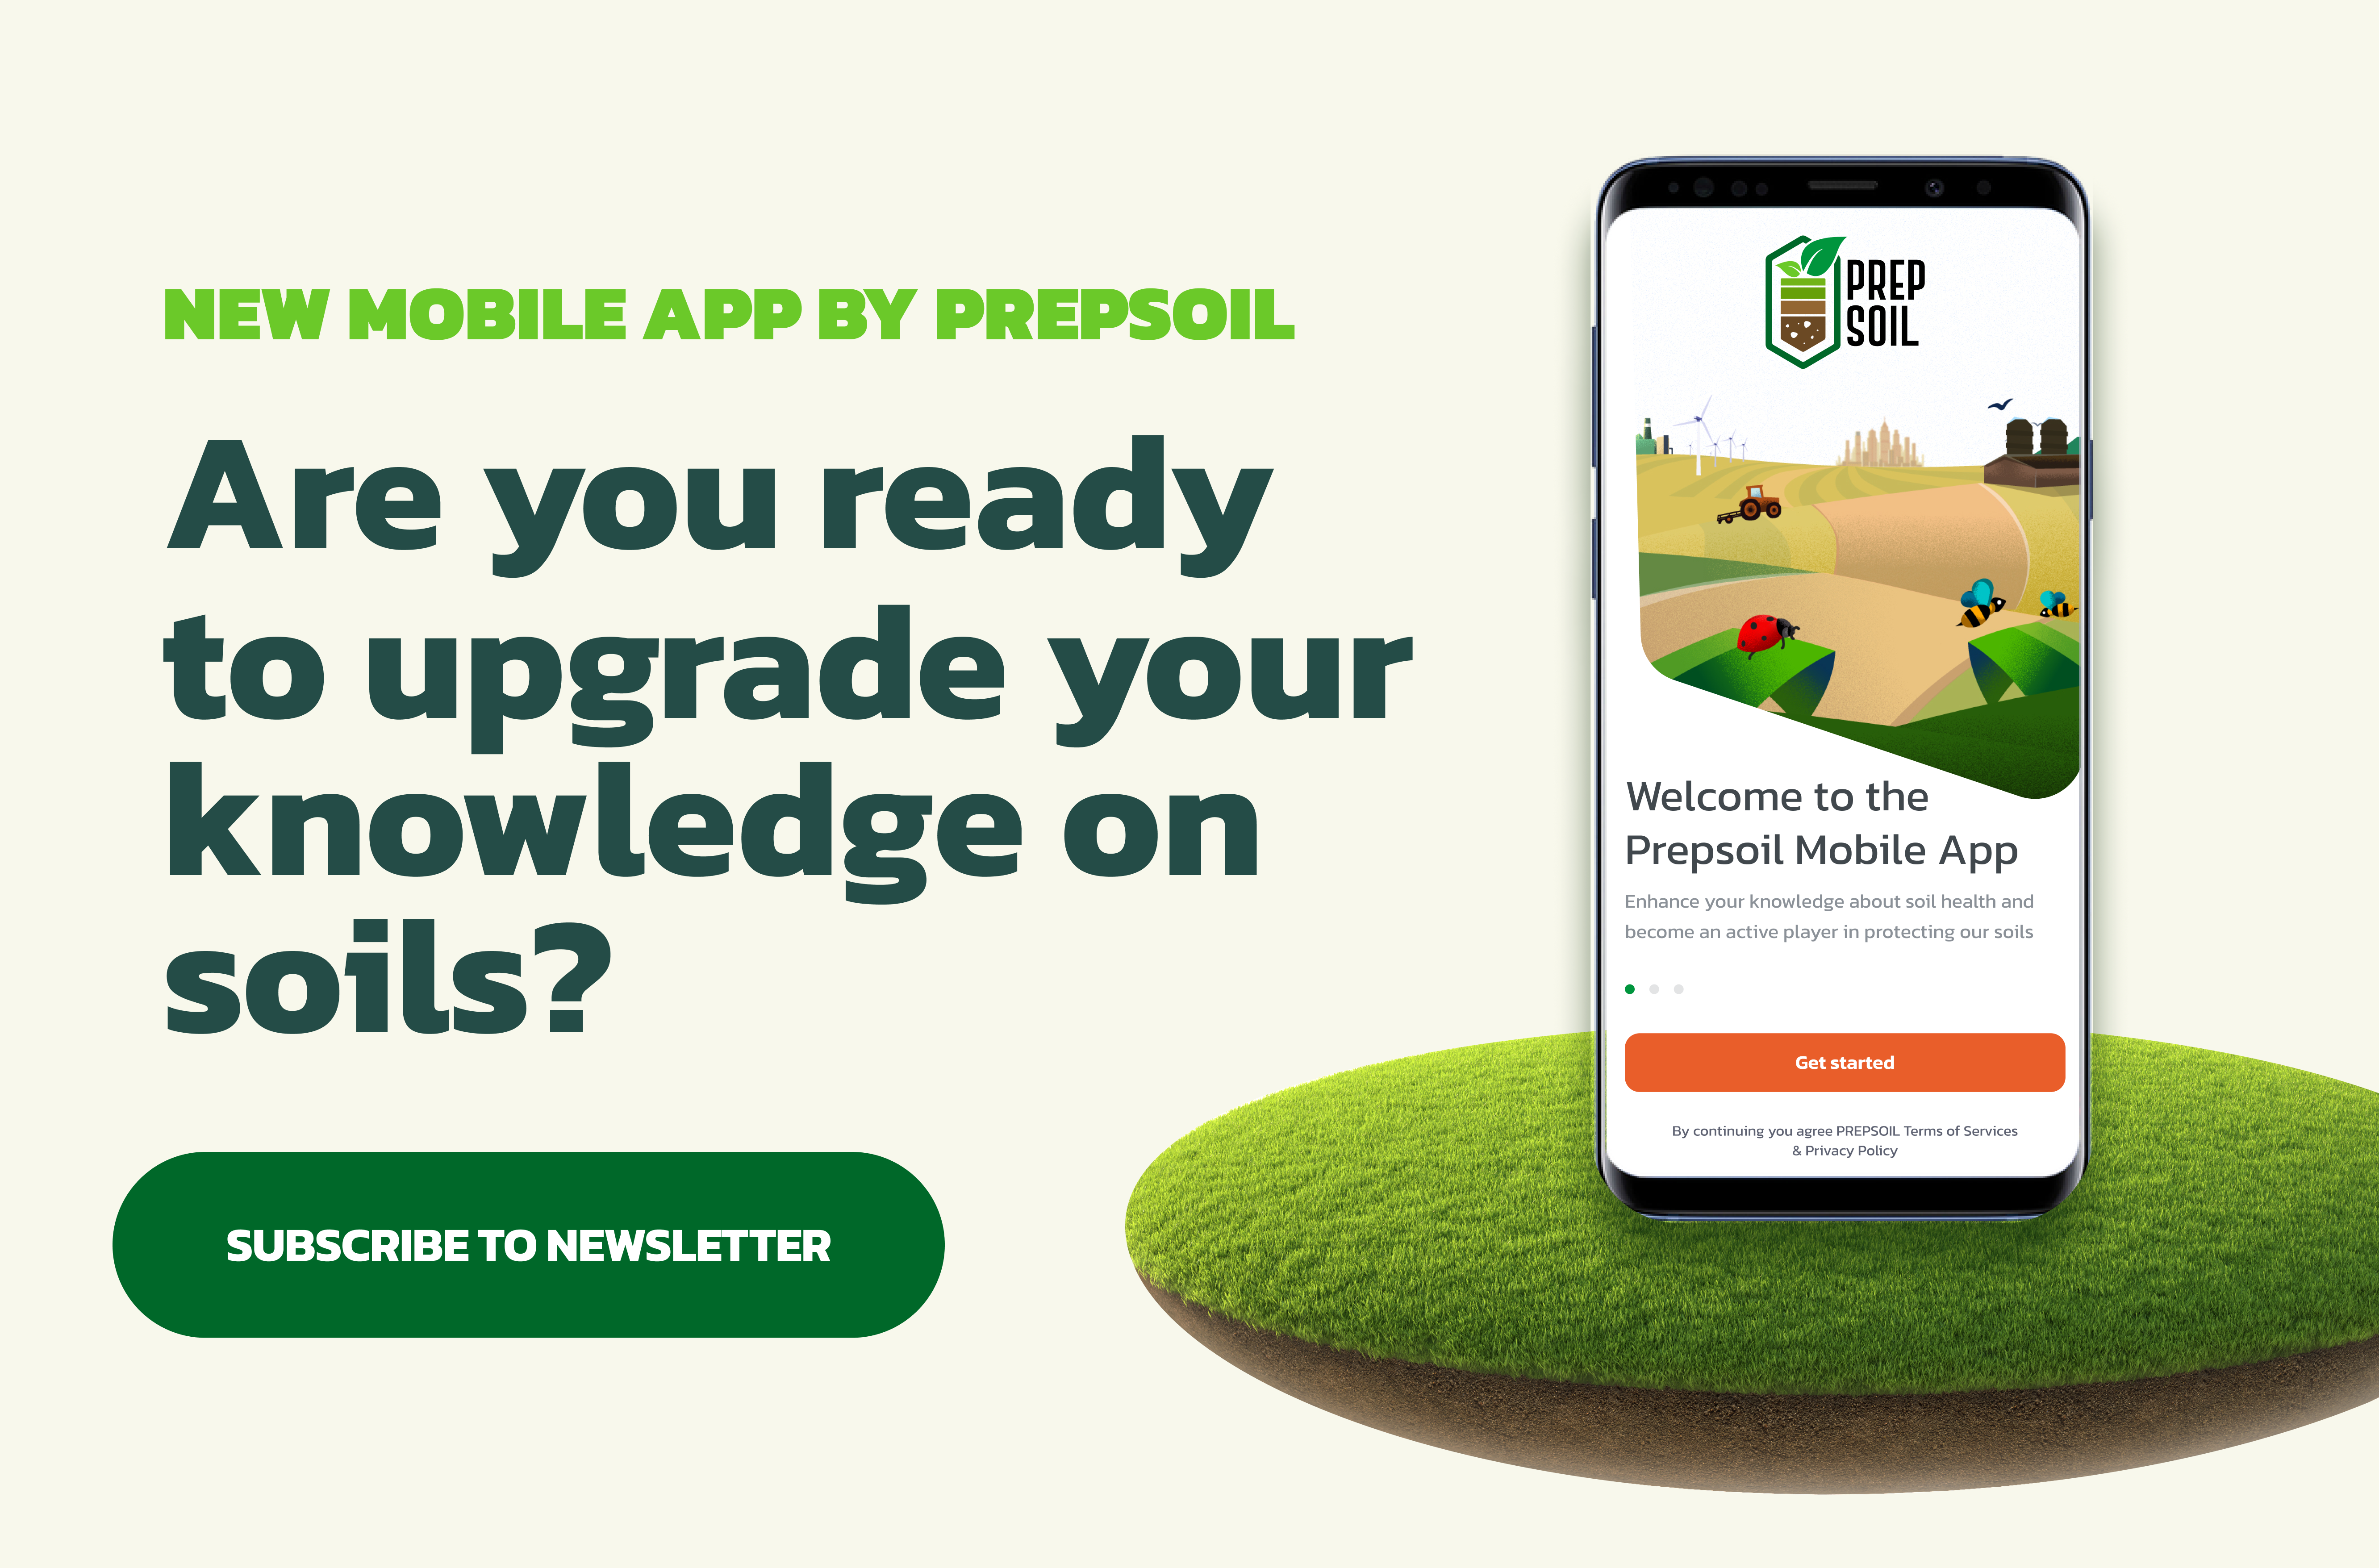 PREPSOIL Mobile App